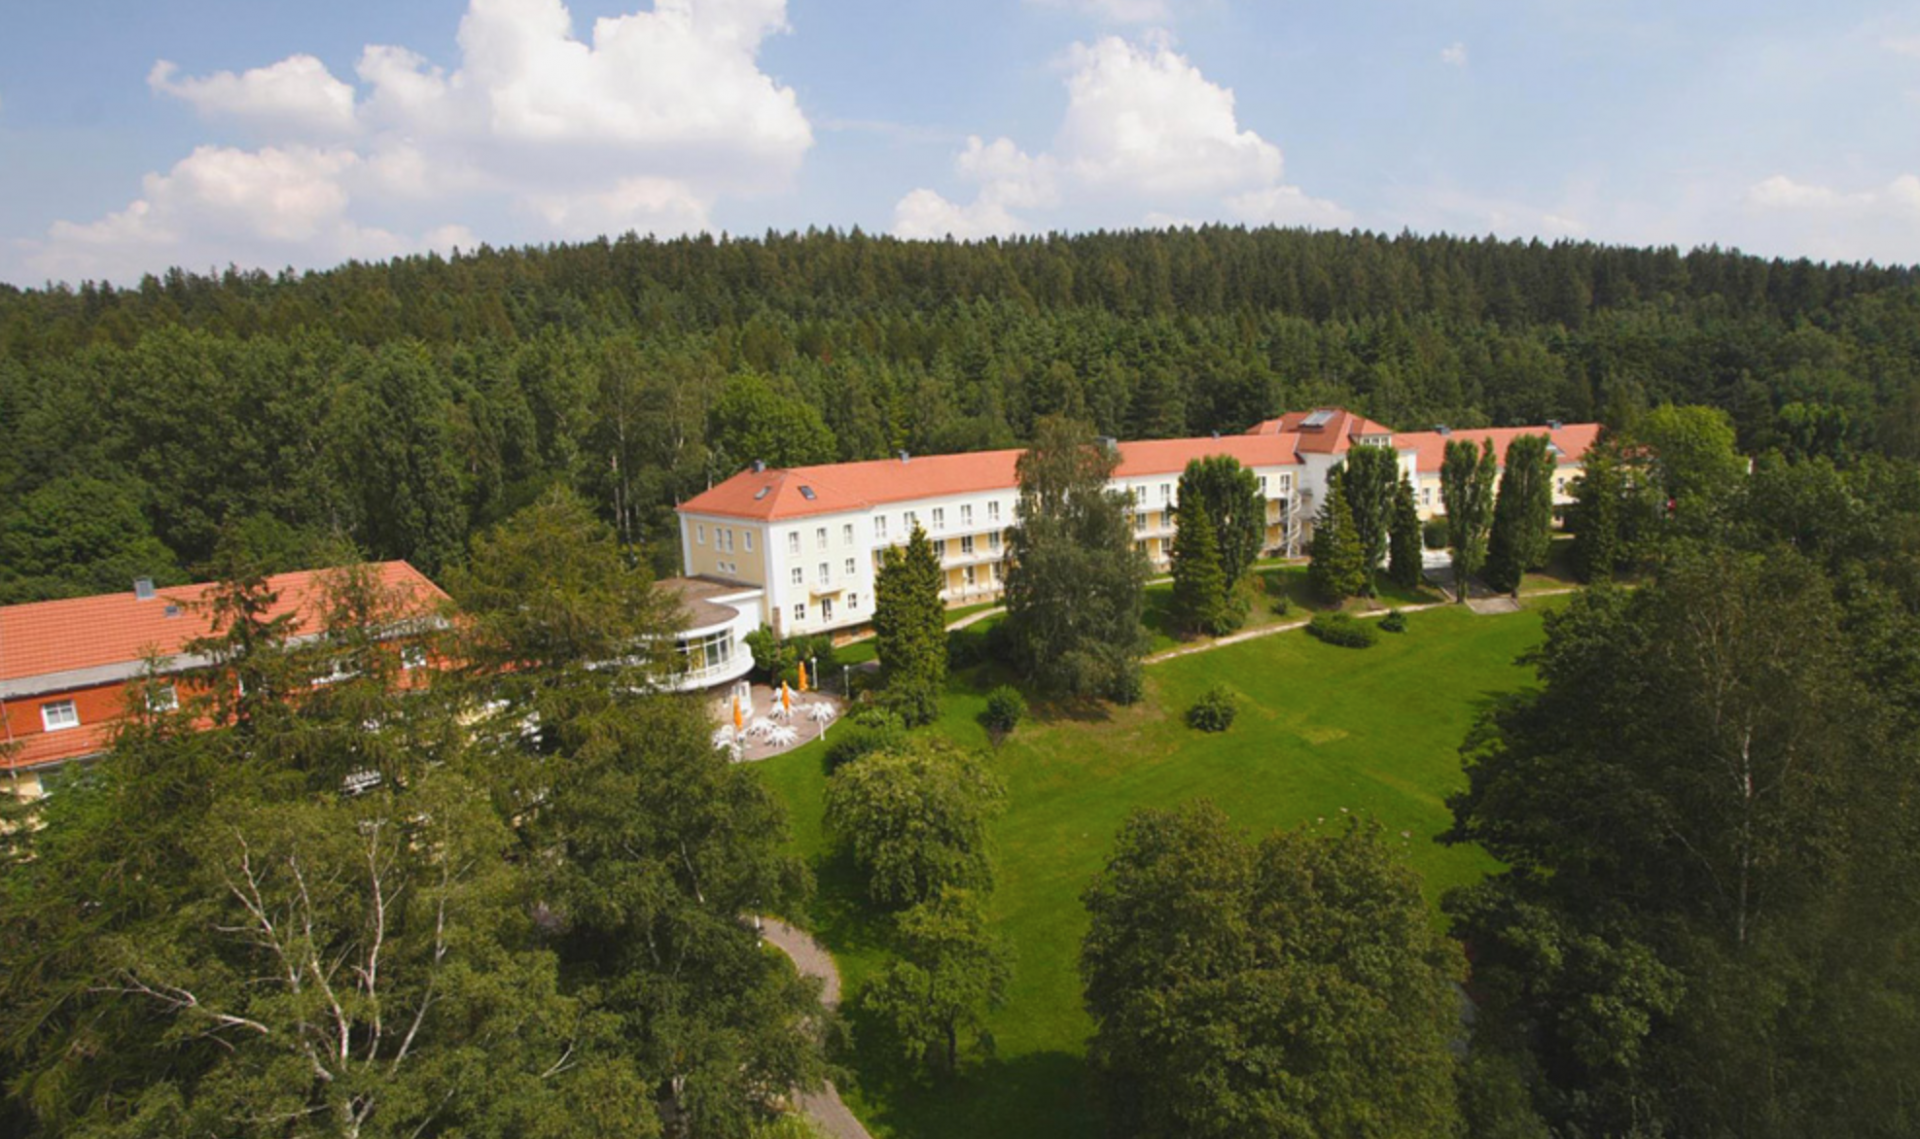 4 Tage Wandern rund um den Inselsberg 2022 – AKZENT Hotel Am Burgholz (4 Sterne) in Tabarz, Thüringen inkl. Halbpension